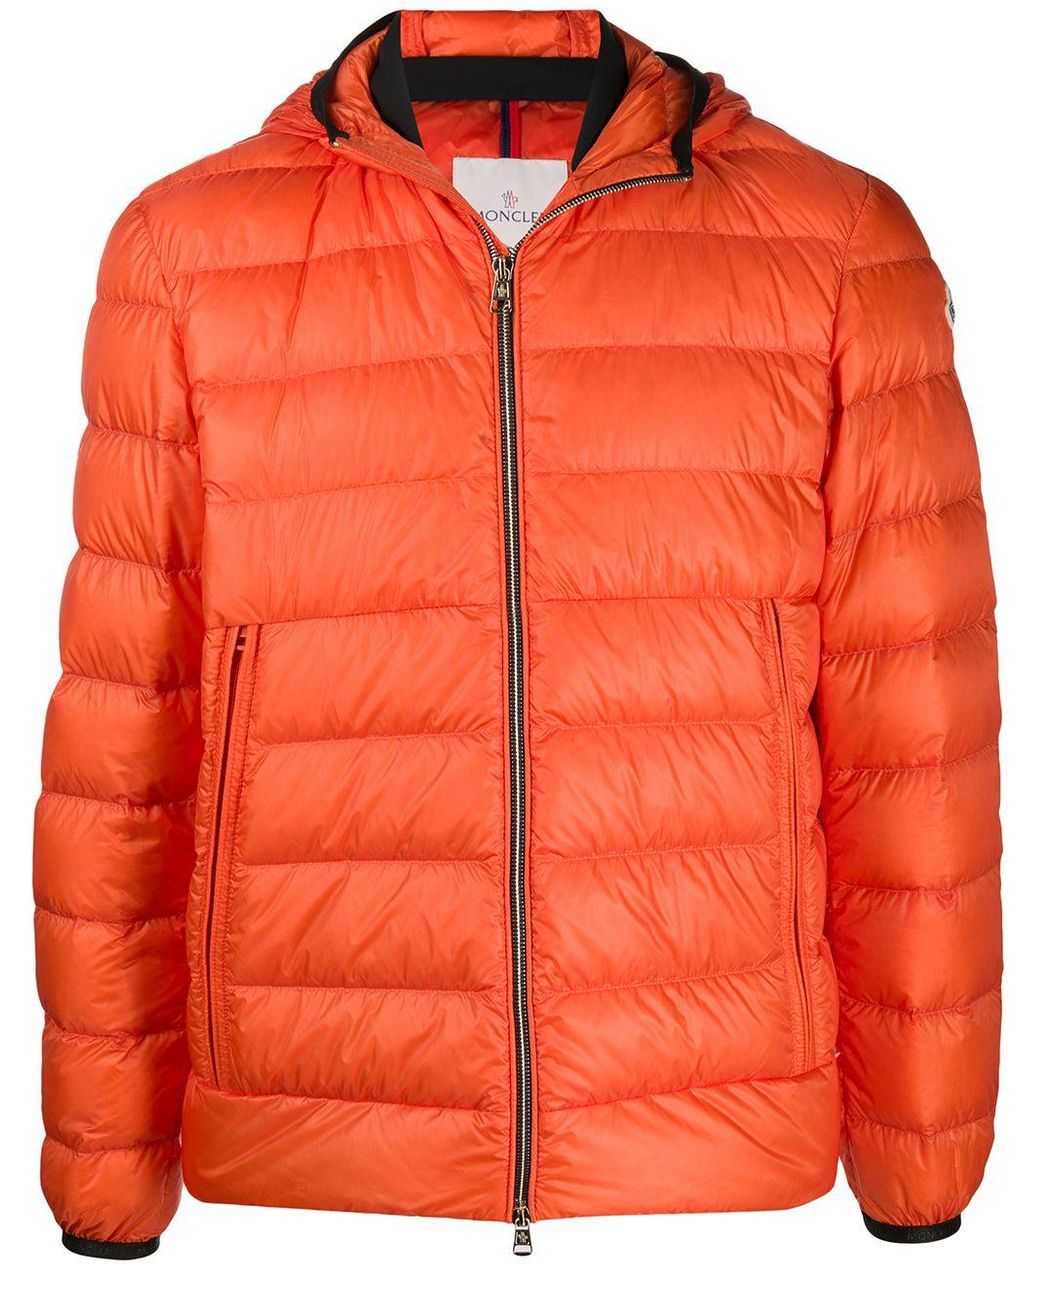 Moncler Hooded Padded Jacket in Orange for Men - Lyst